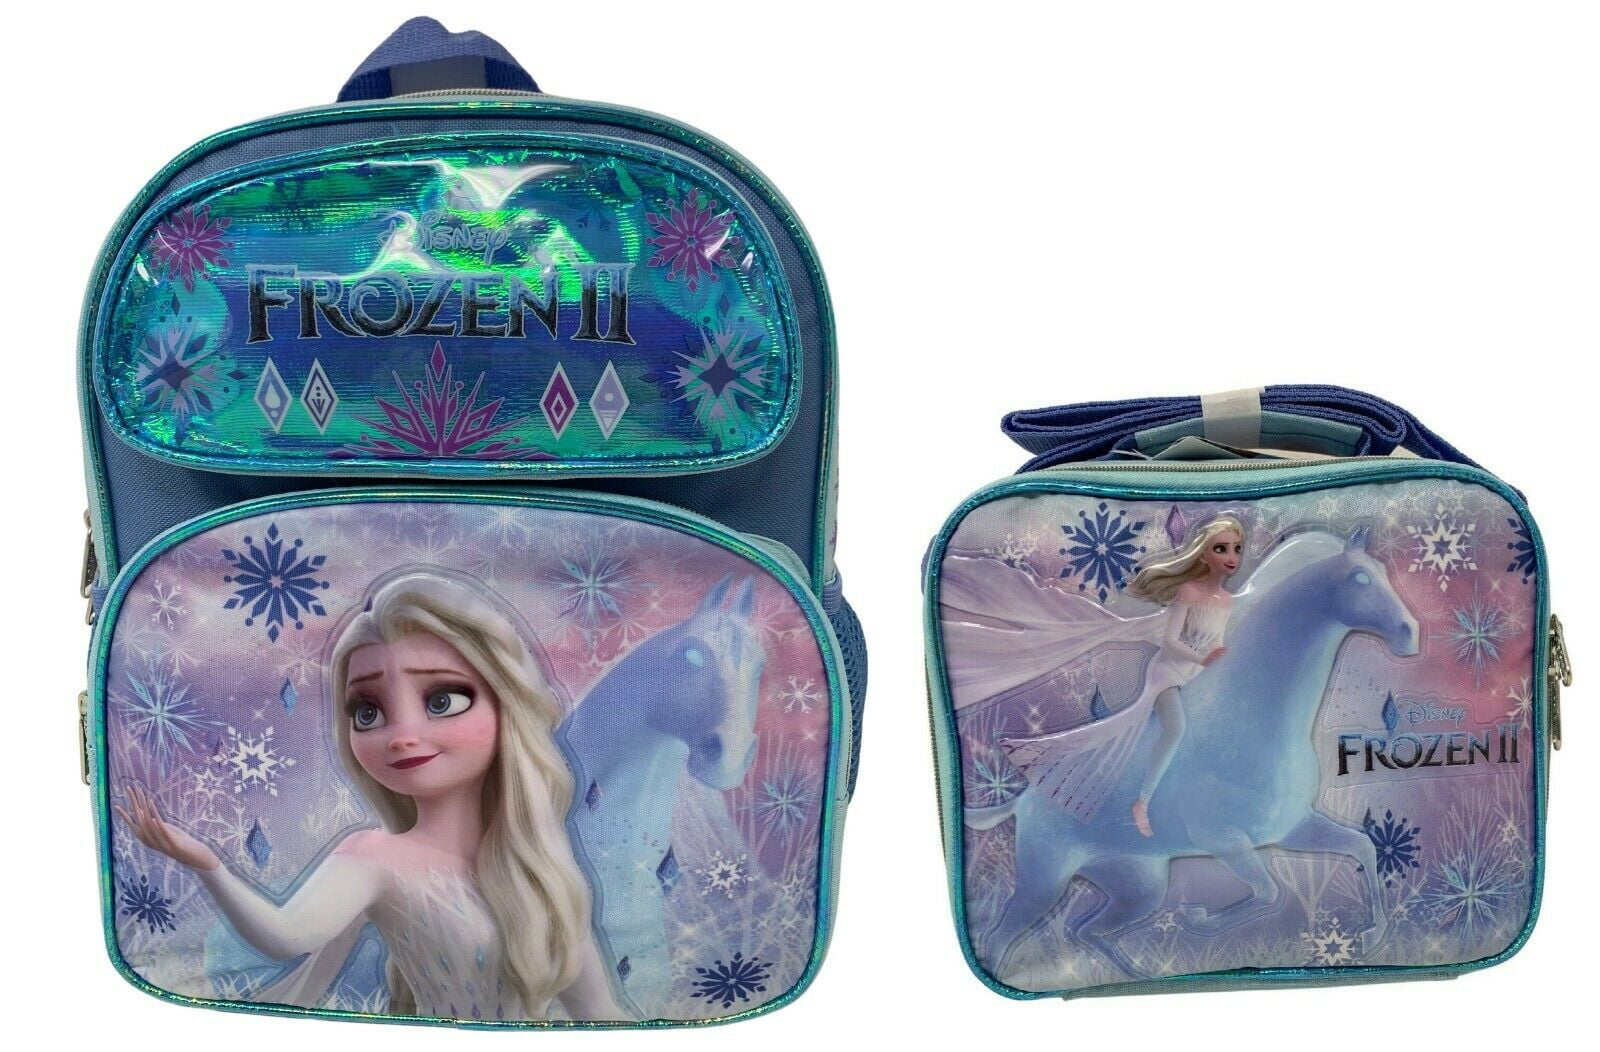 Limited Edition Disney Princess Frozen Elsa 12 Small Backpack Plus Lunch Bag 125acd2d b794 4018 8f2e bca6836aa4ce.b4032e3eb4a9668a65da378622eed1ad